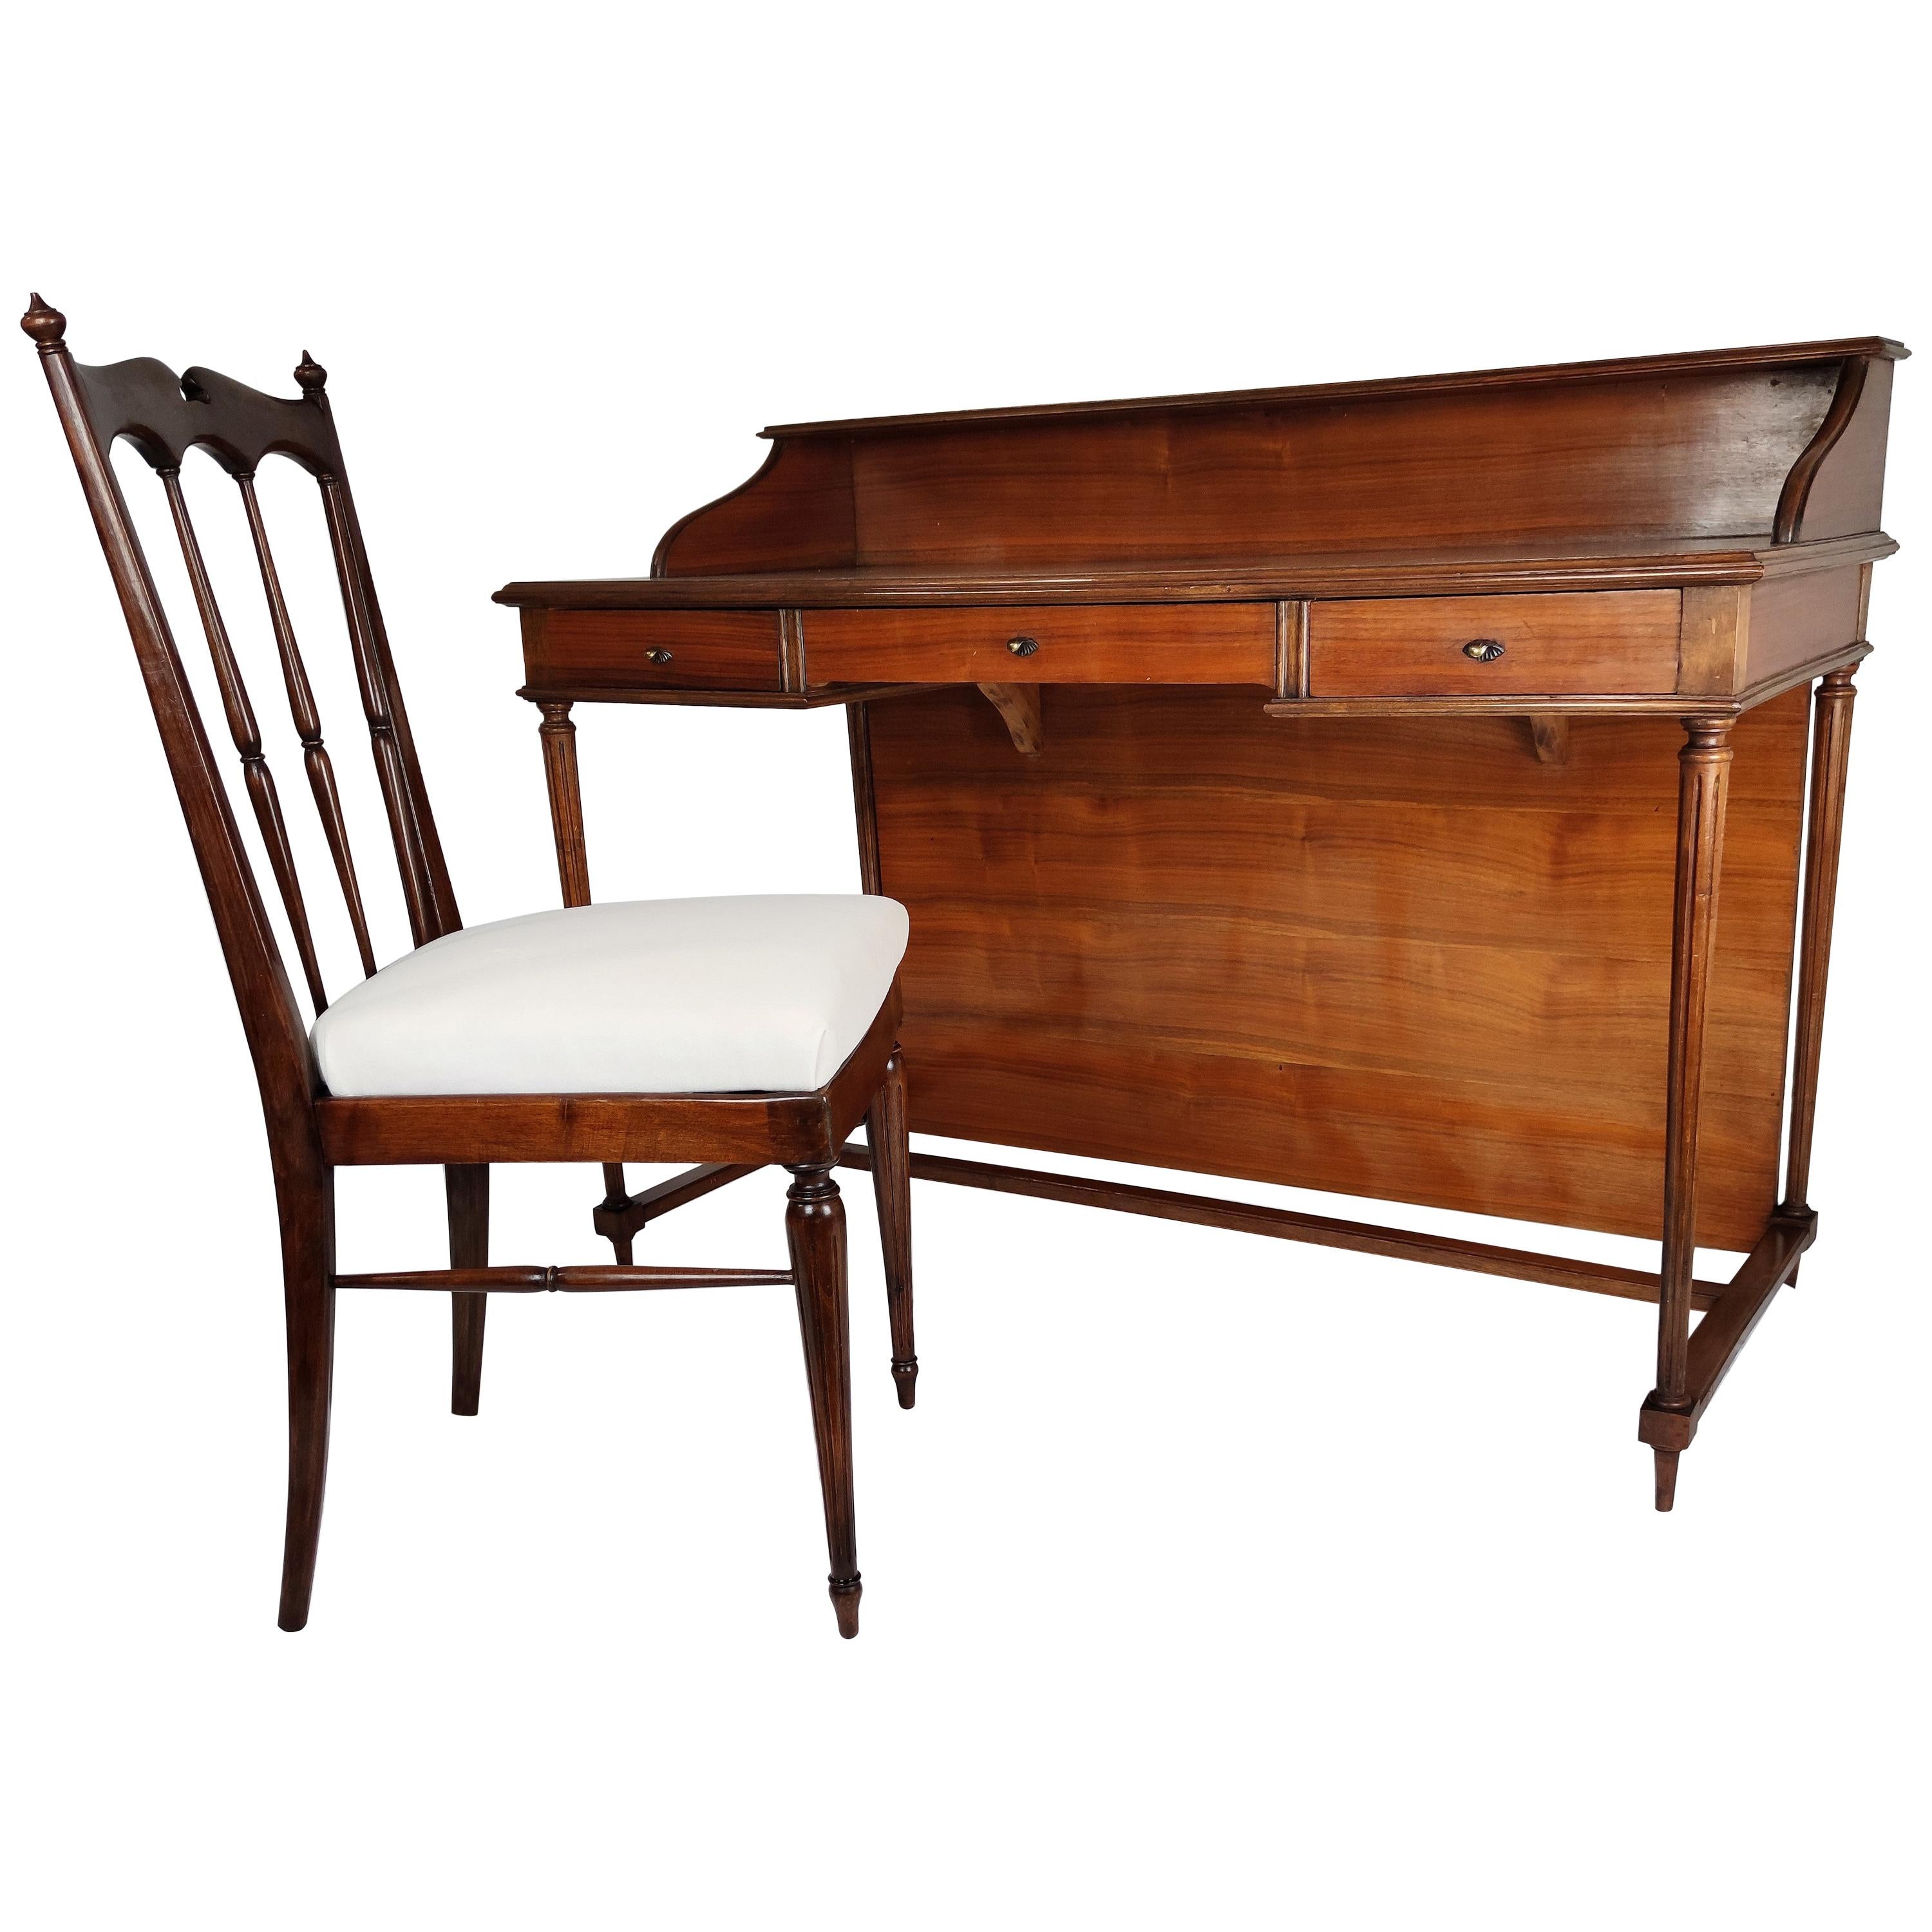 1950s Italian Mid-Century Modern Regency Desk Writing Table and Chair